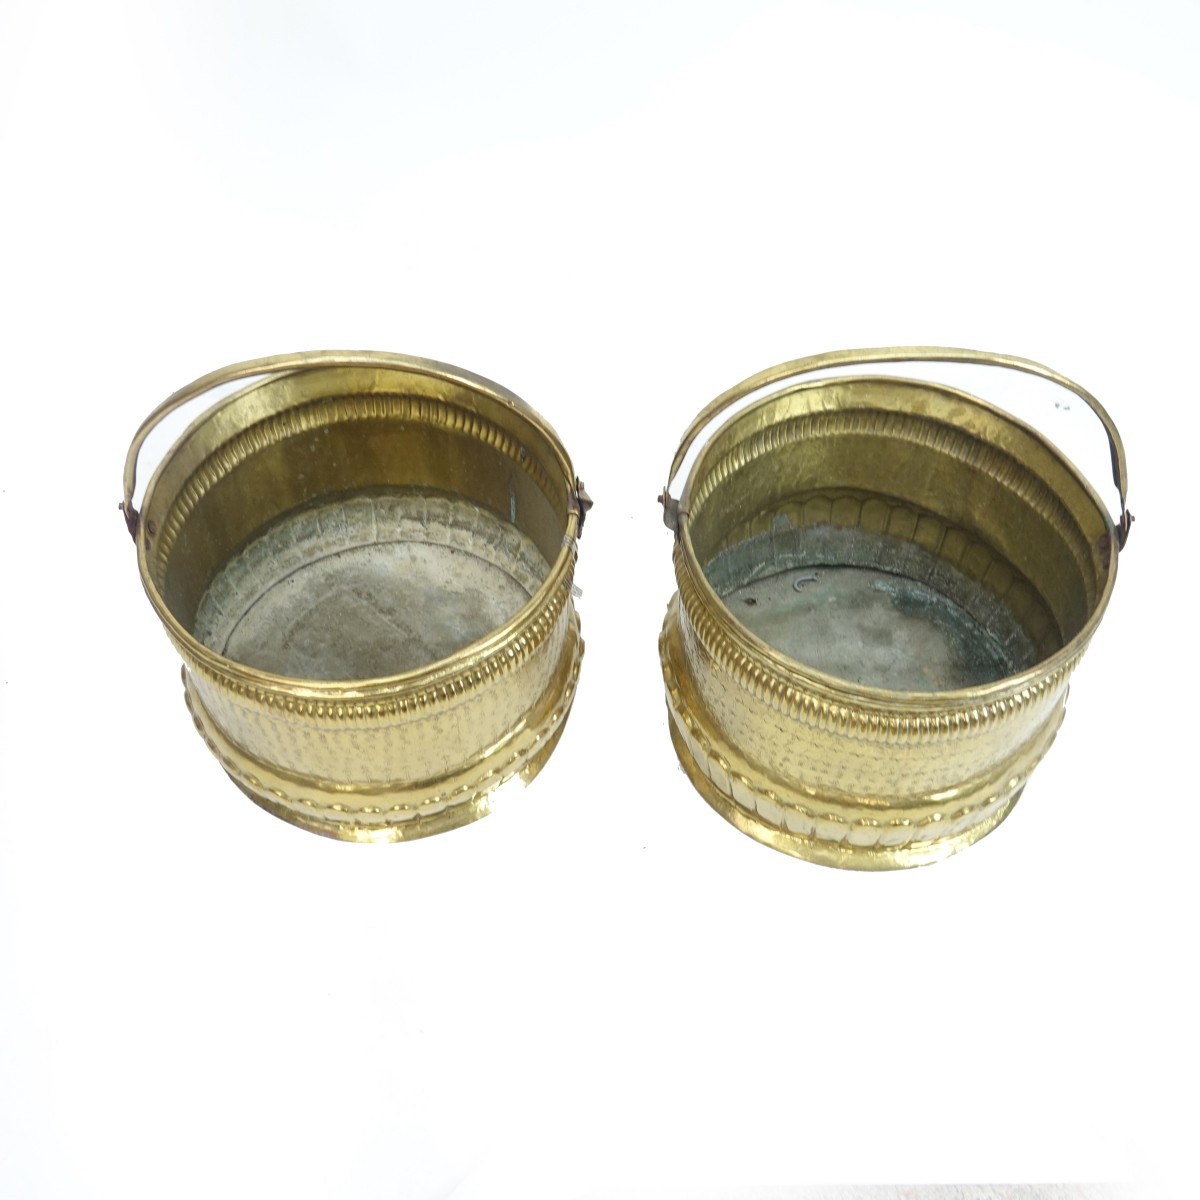 Pair of Vintage Brass Handled Buckets